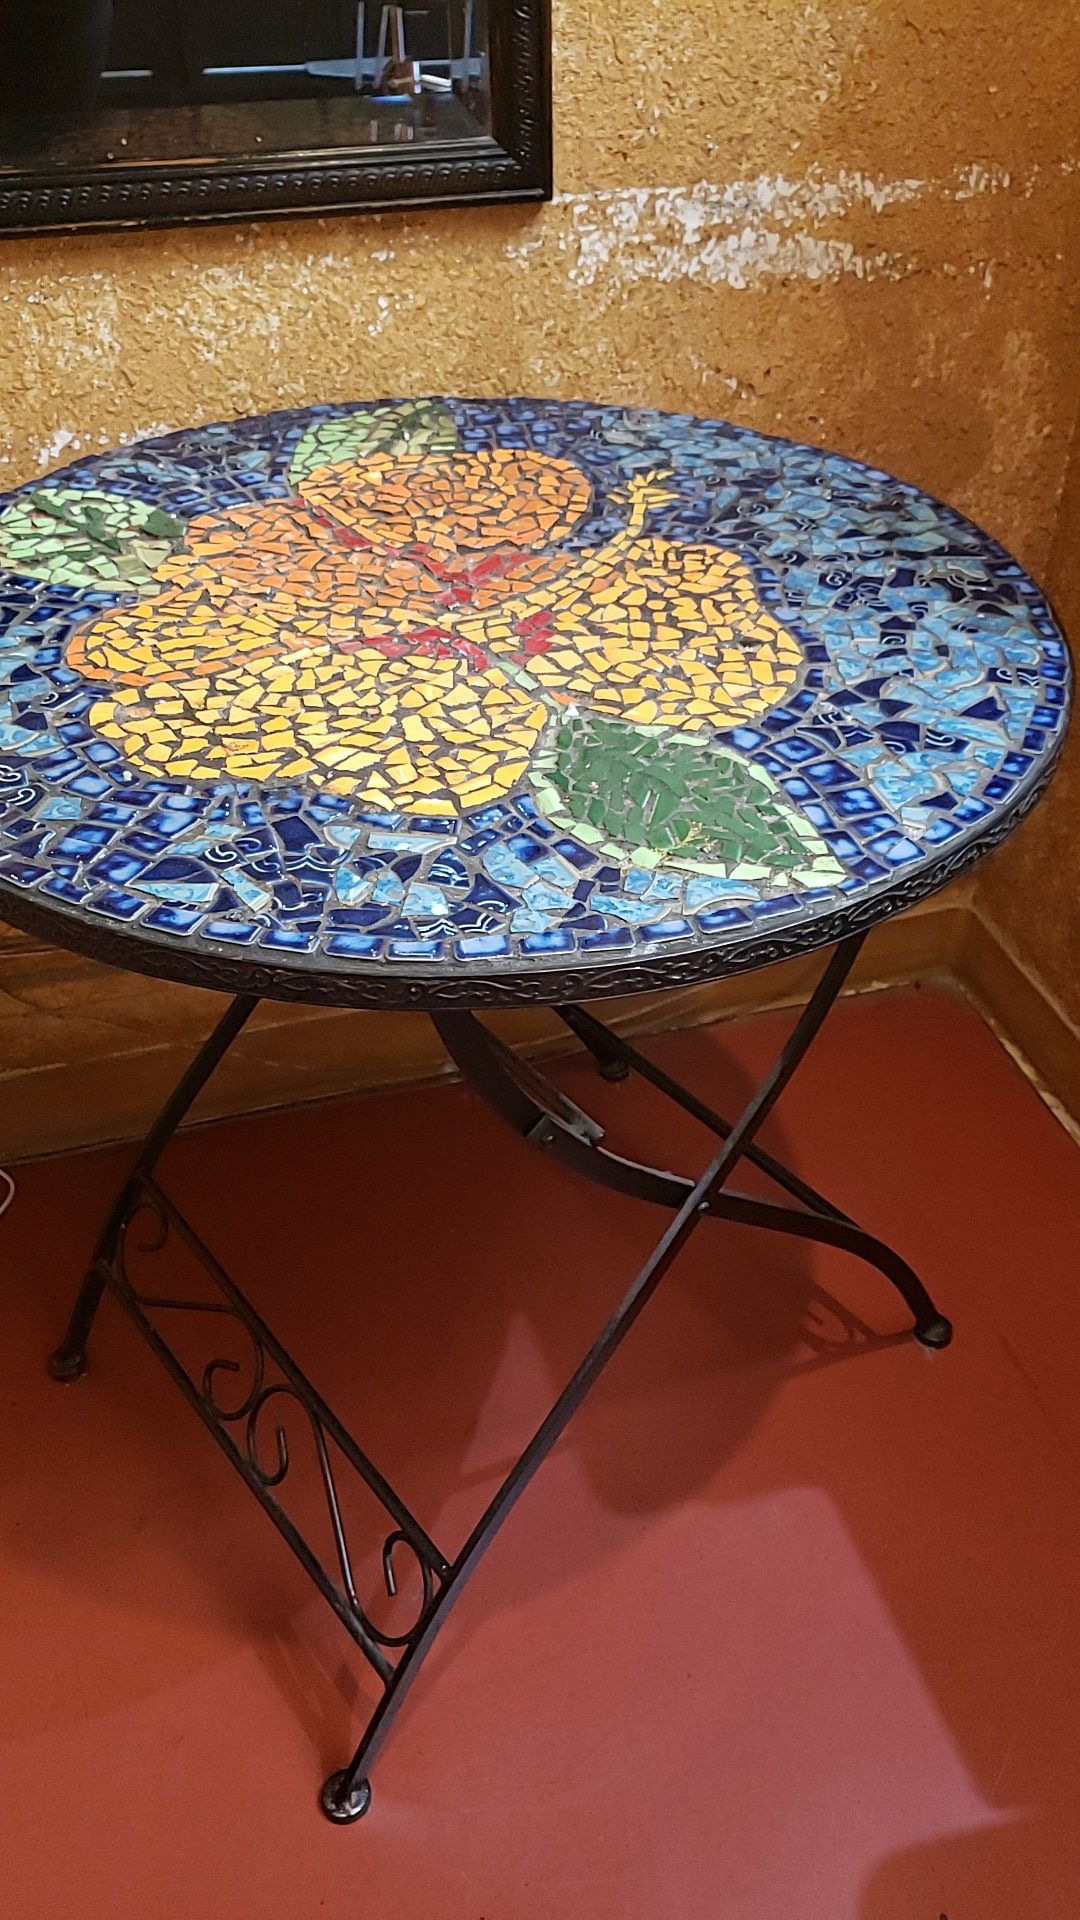 Small mosaic table